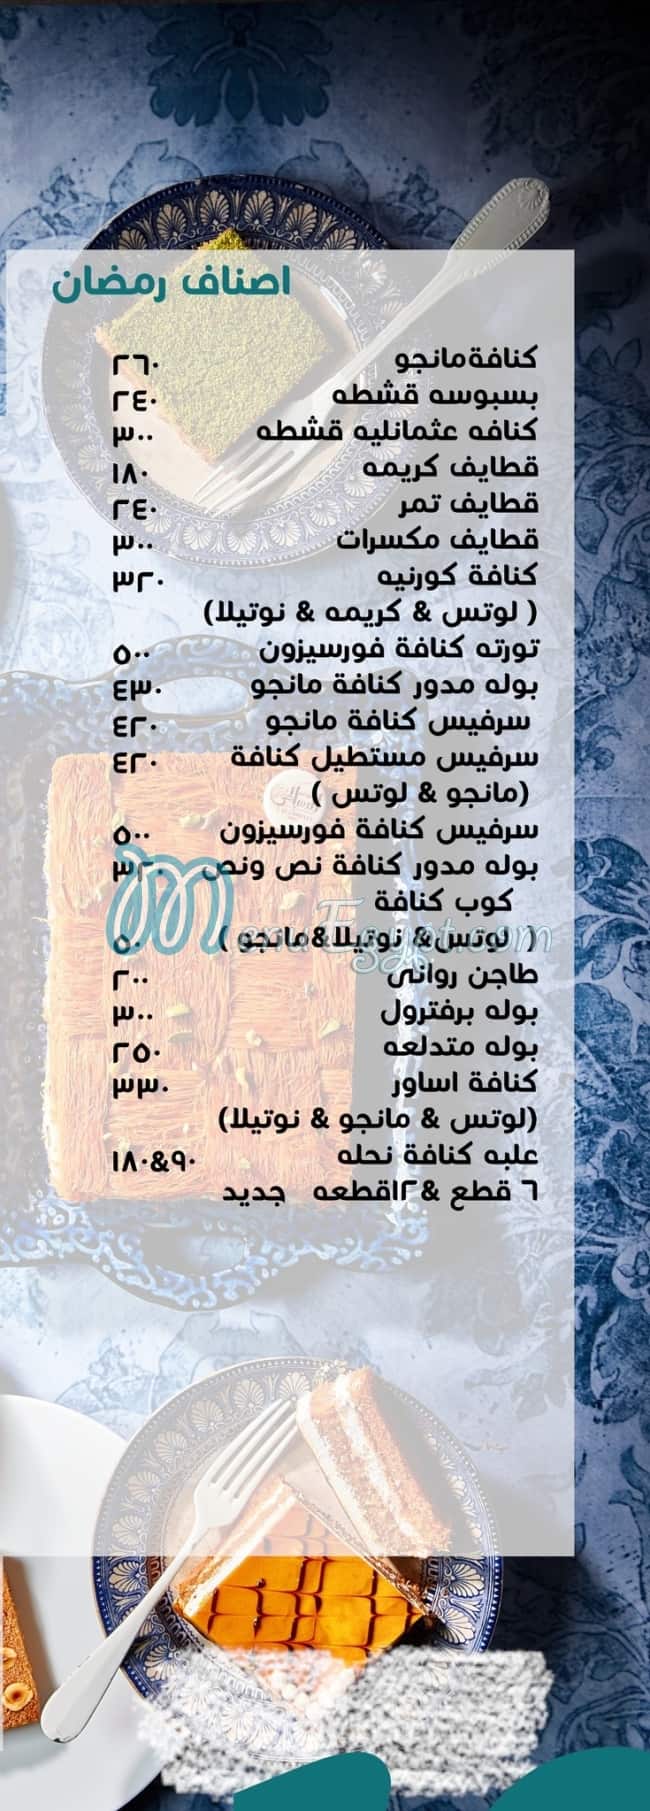 El Domiaty menu Egypt 3